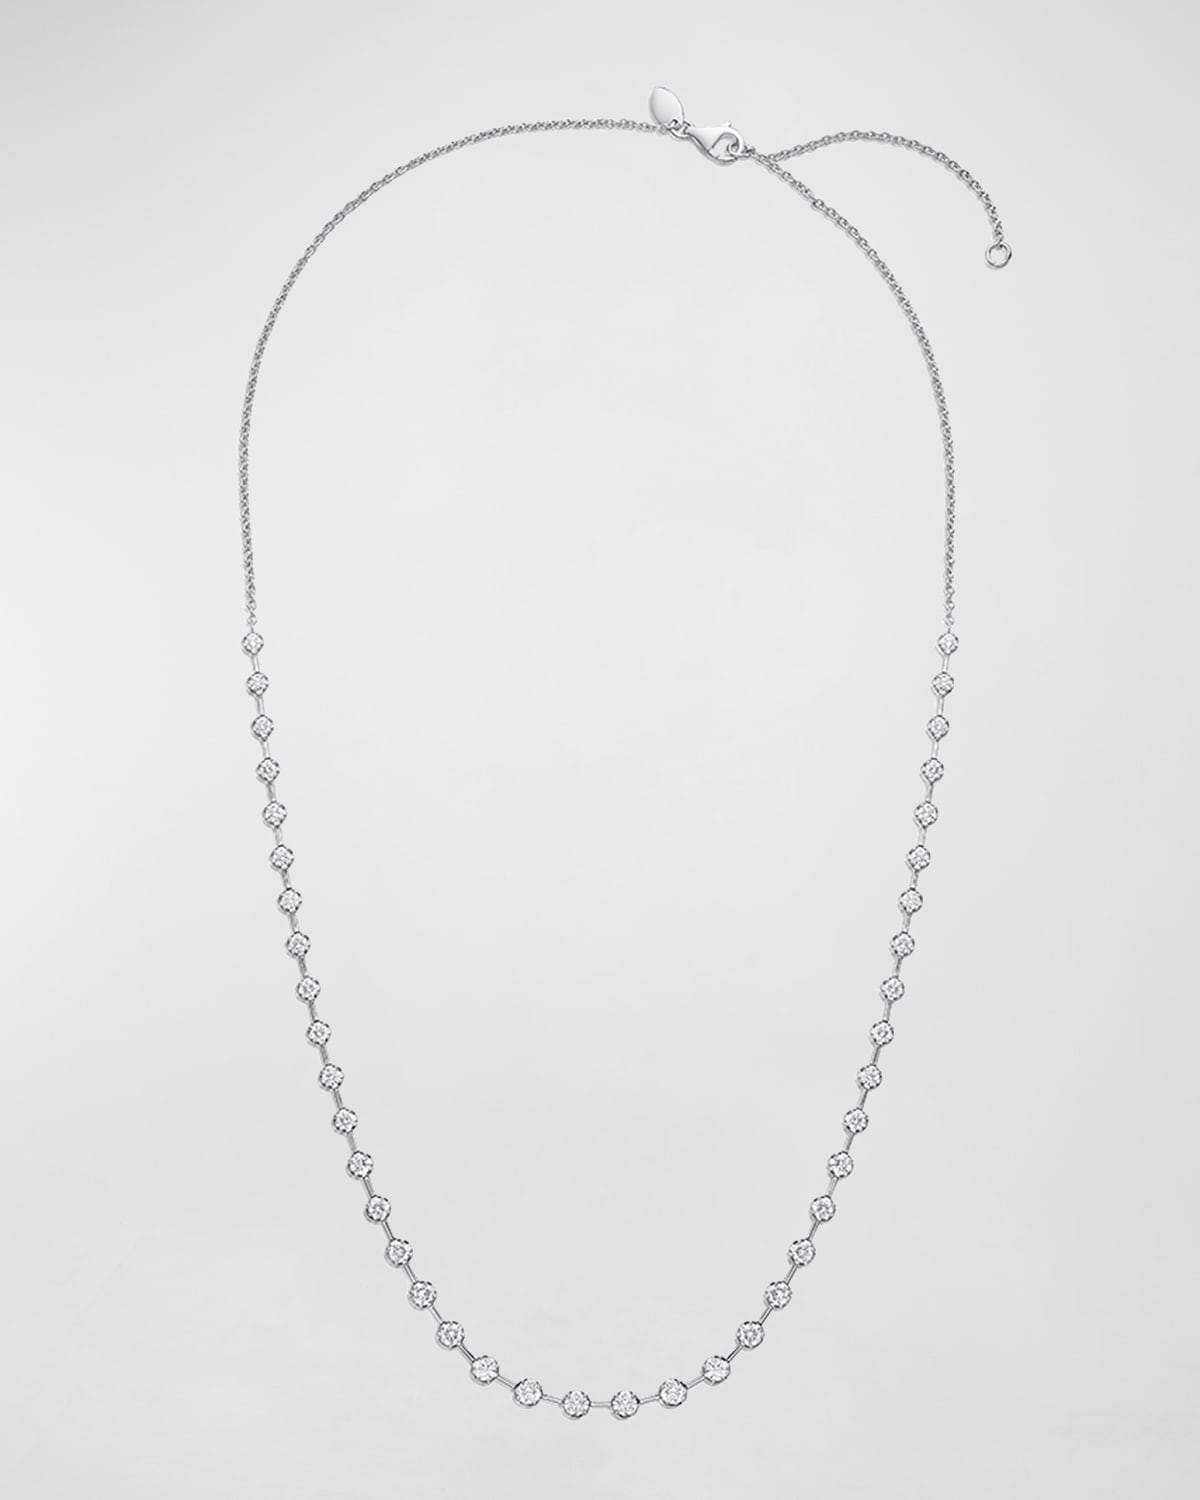 Diamond Line 18k White Gold Chain Necklace, 16-18"L, 1.96tcw